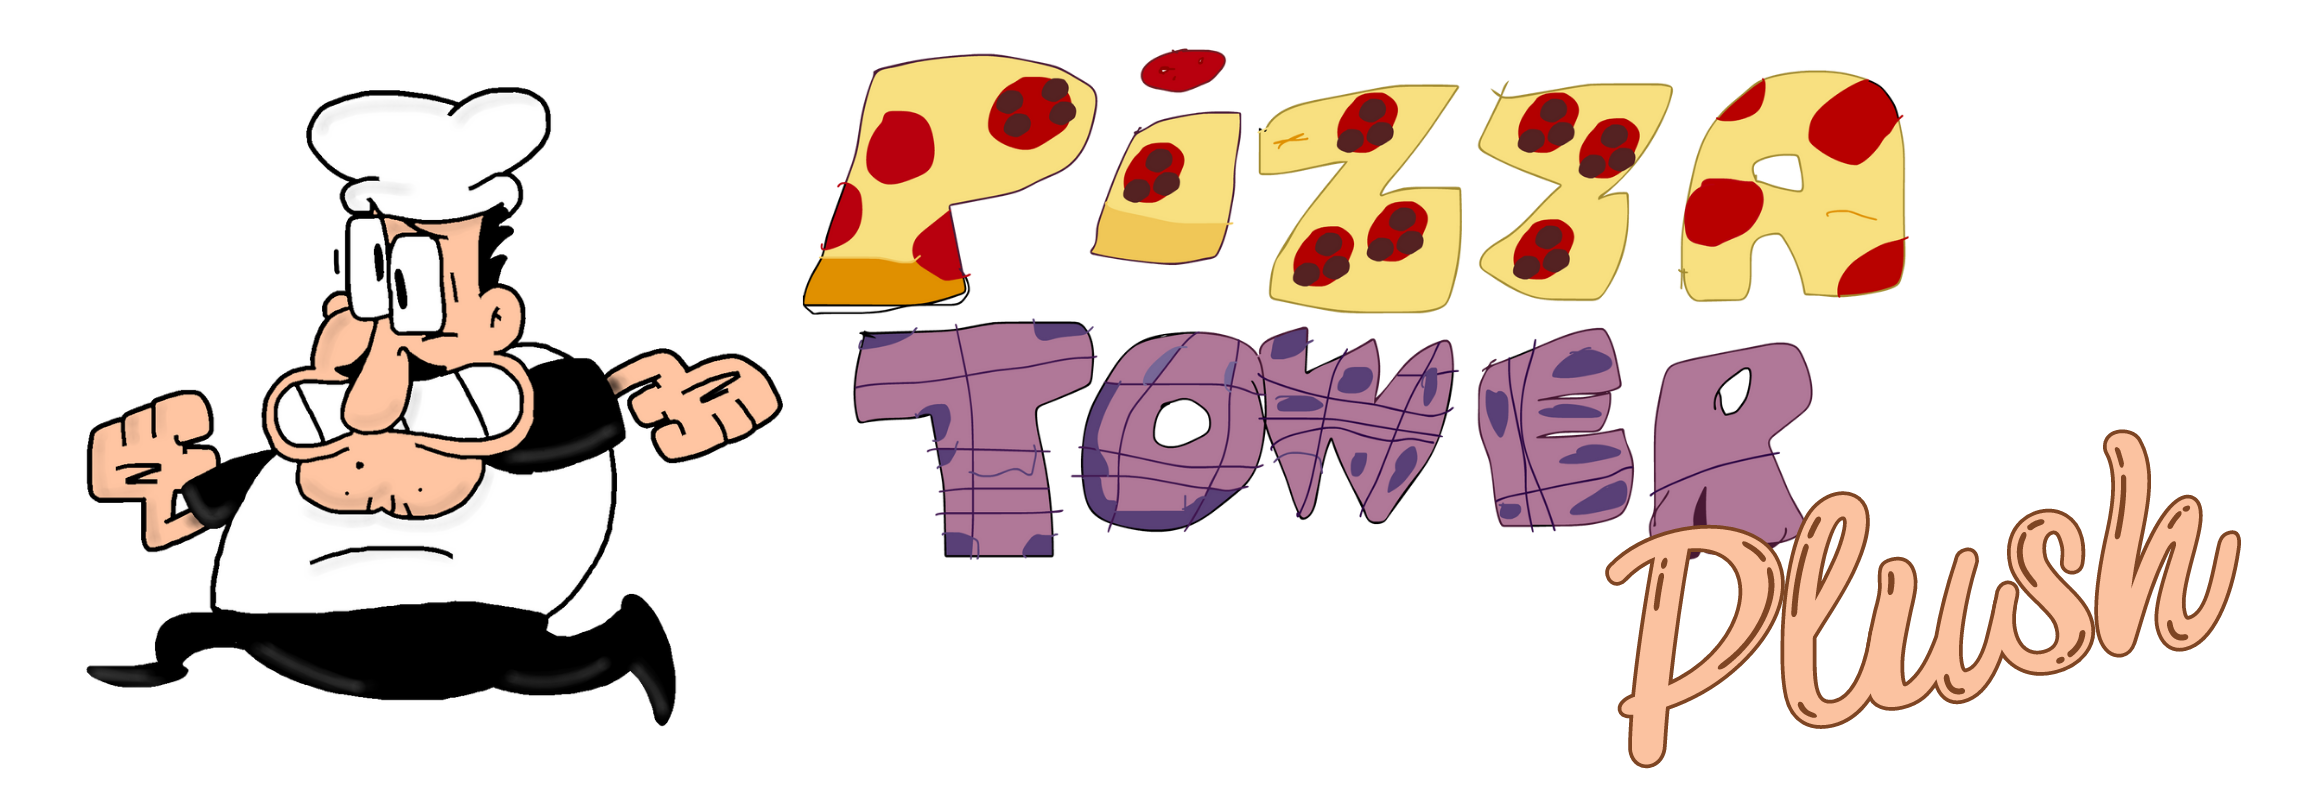 Pizza Tower plush1 - Pizza Tower Plush